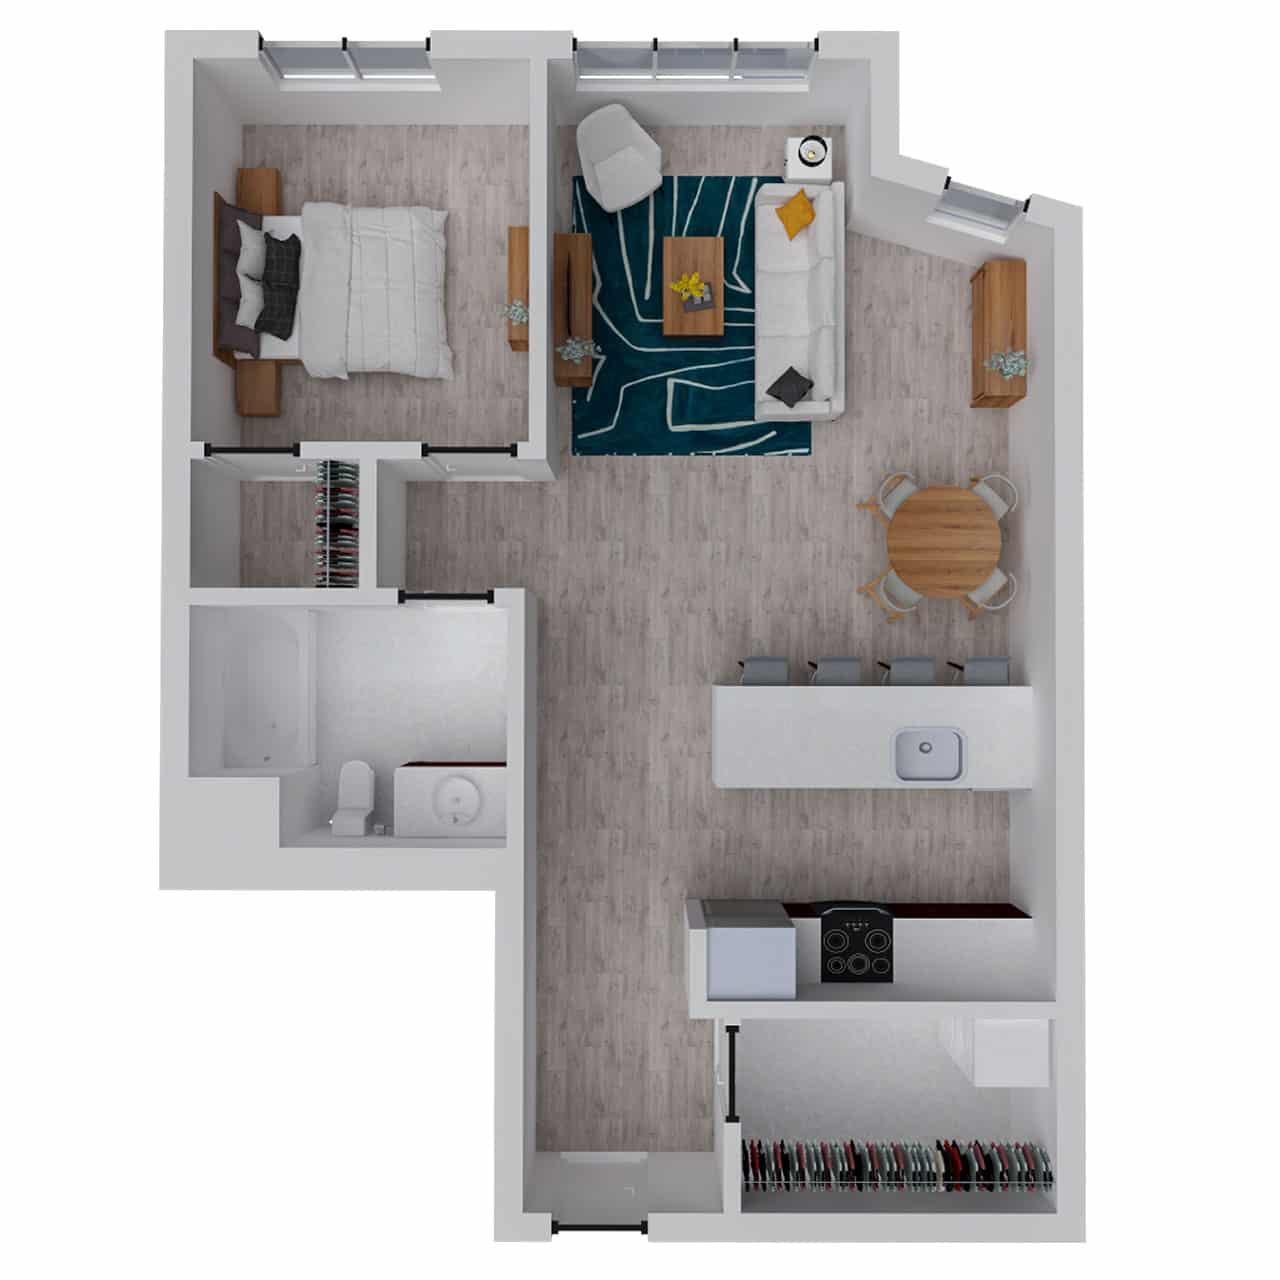 Attwell, A13 floor plan, one bedroom, one bath.